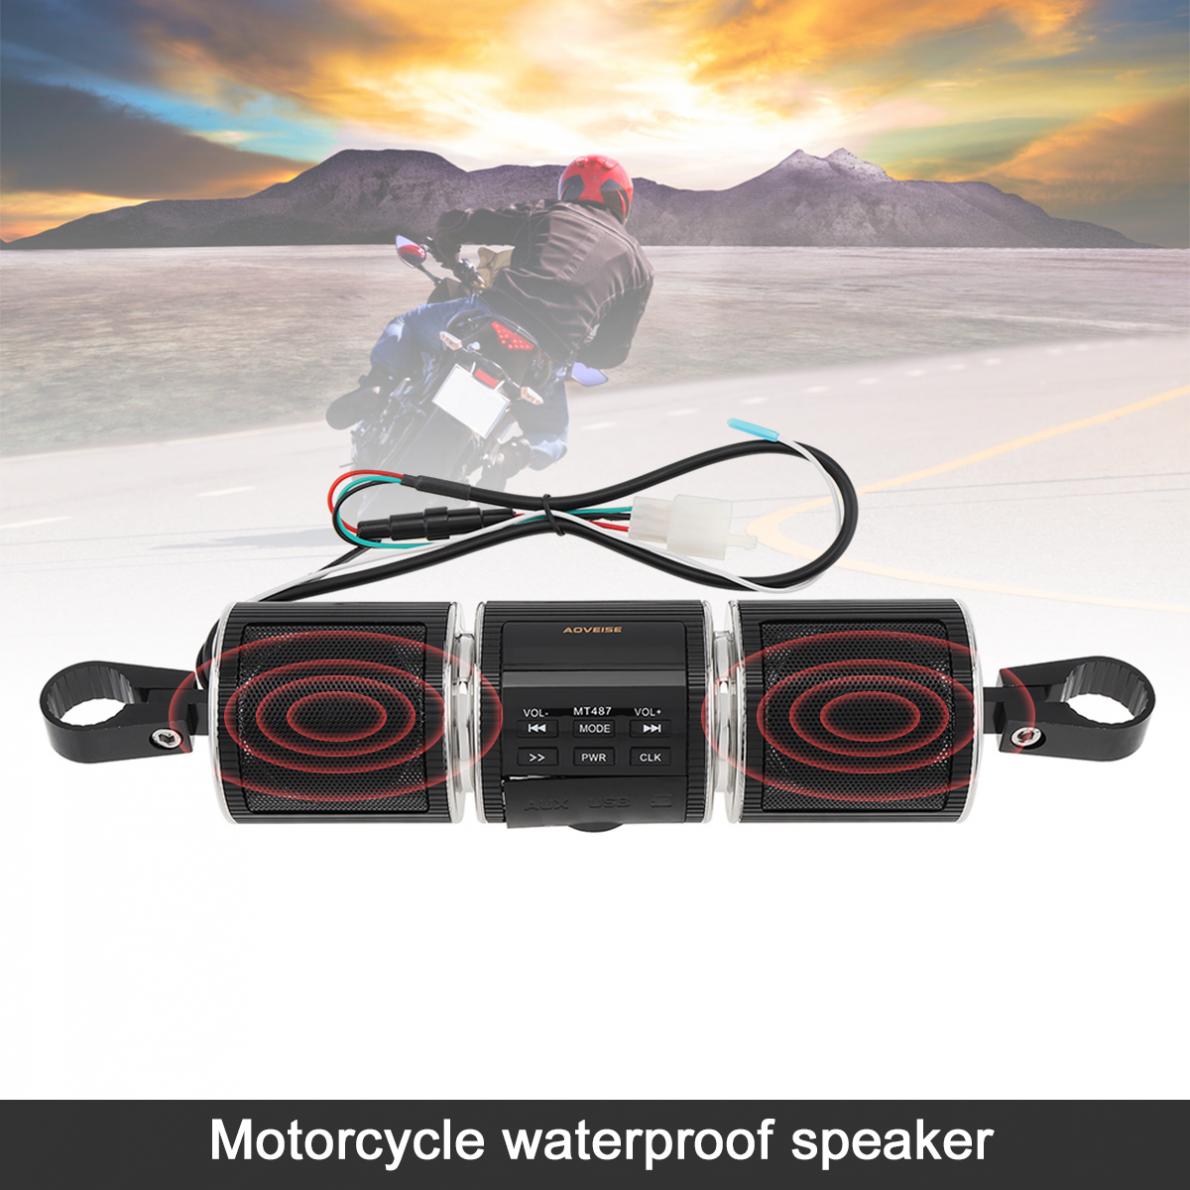 Mt487 vandtæt bluetooth motorcykel fm radio stereo musikafspiller anti-tyveri med usb  mp3 aux interface og skærm